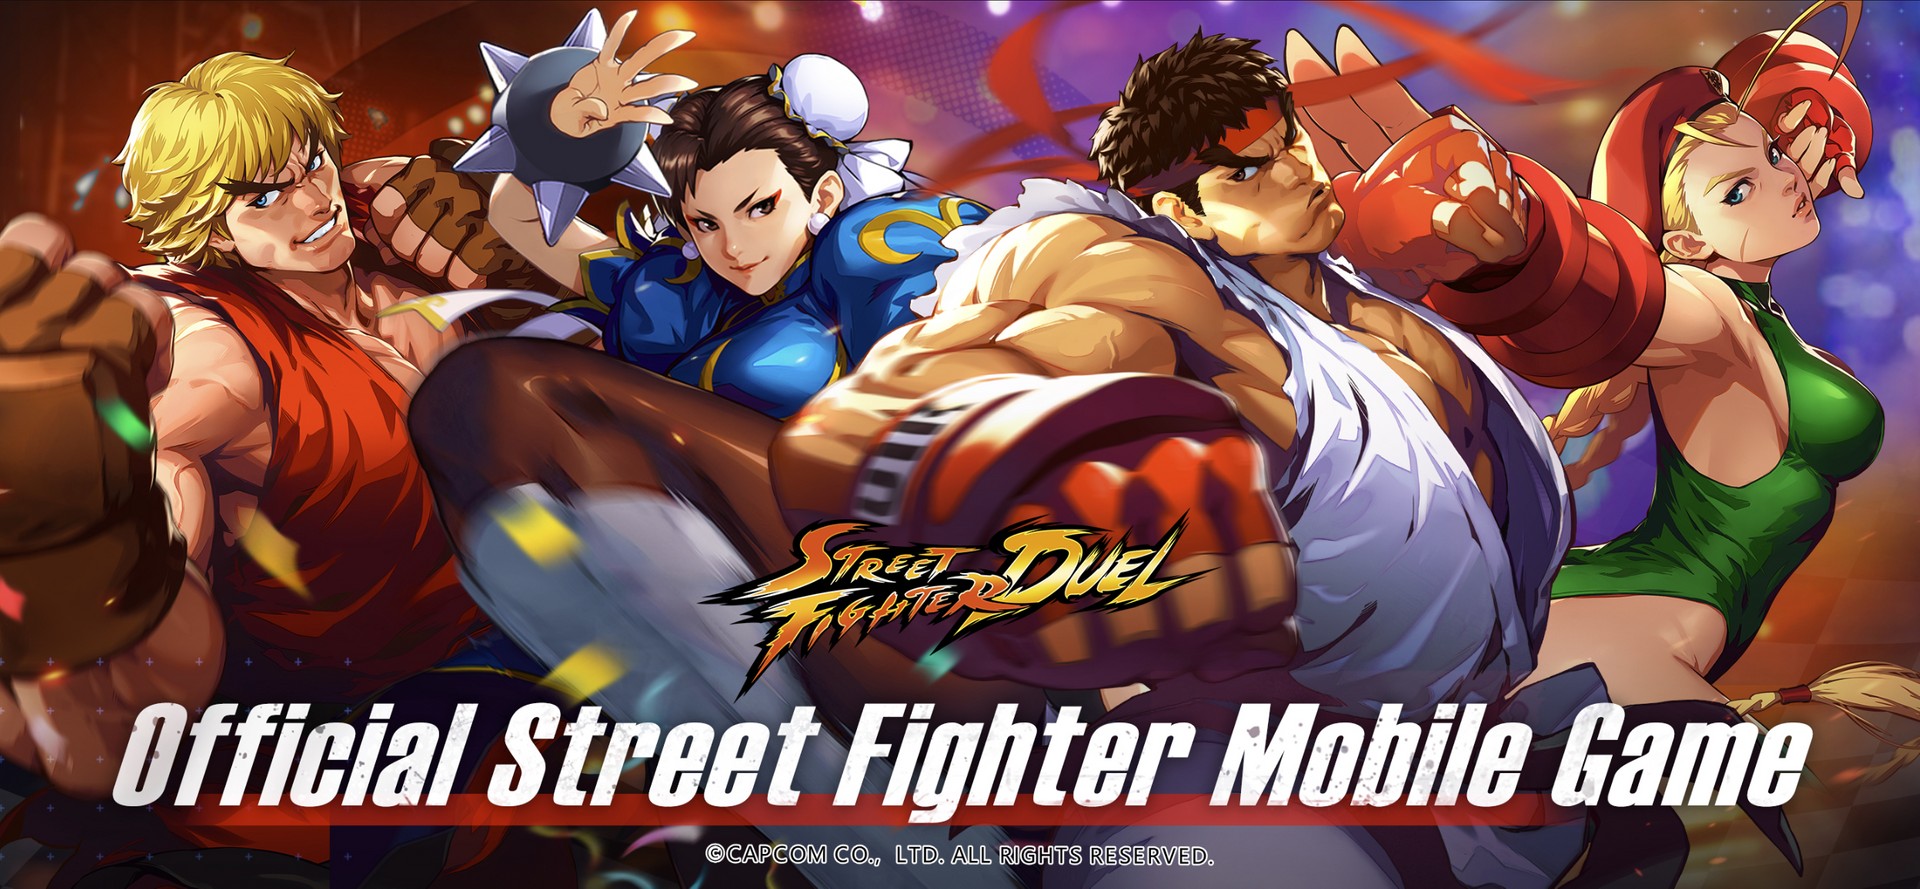 Street Fighter, nuovo gioco mobile in arrivo da Capcom e Crunchyroll